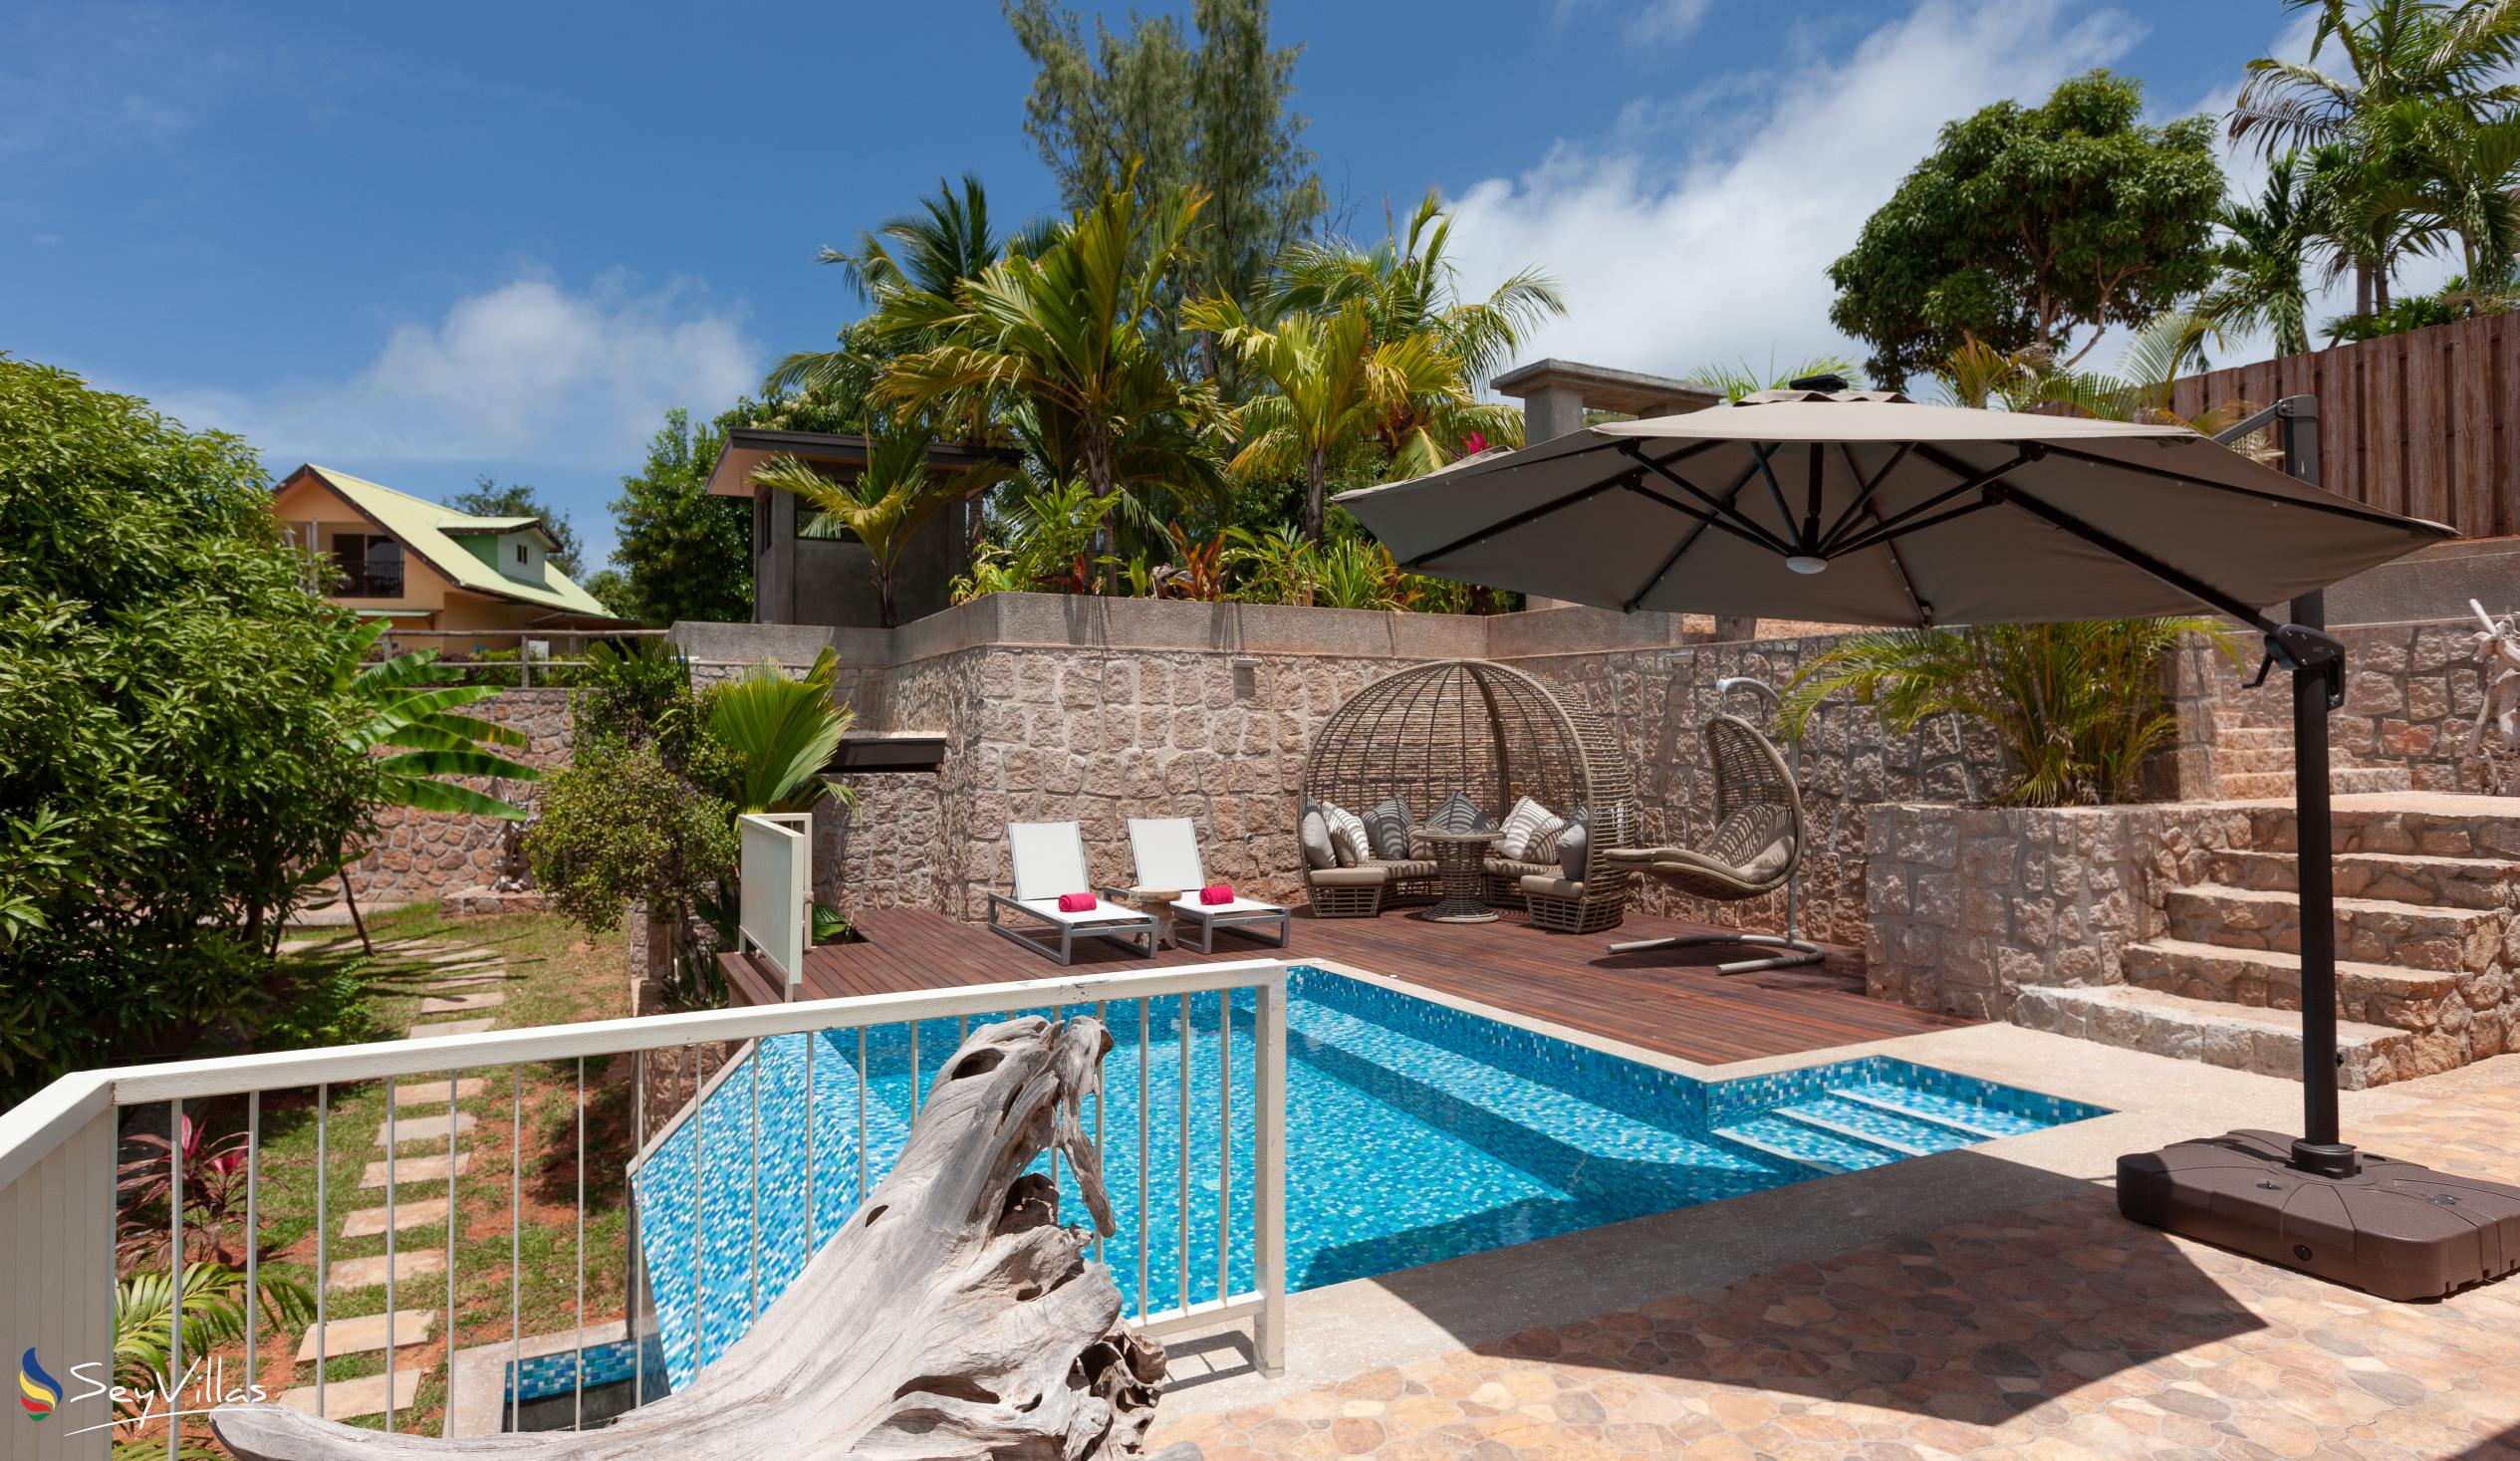 Foto 29: Le Duc de Praslin Hillside Villas - Villa 180° - Praslin (Seychellen)